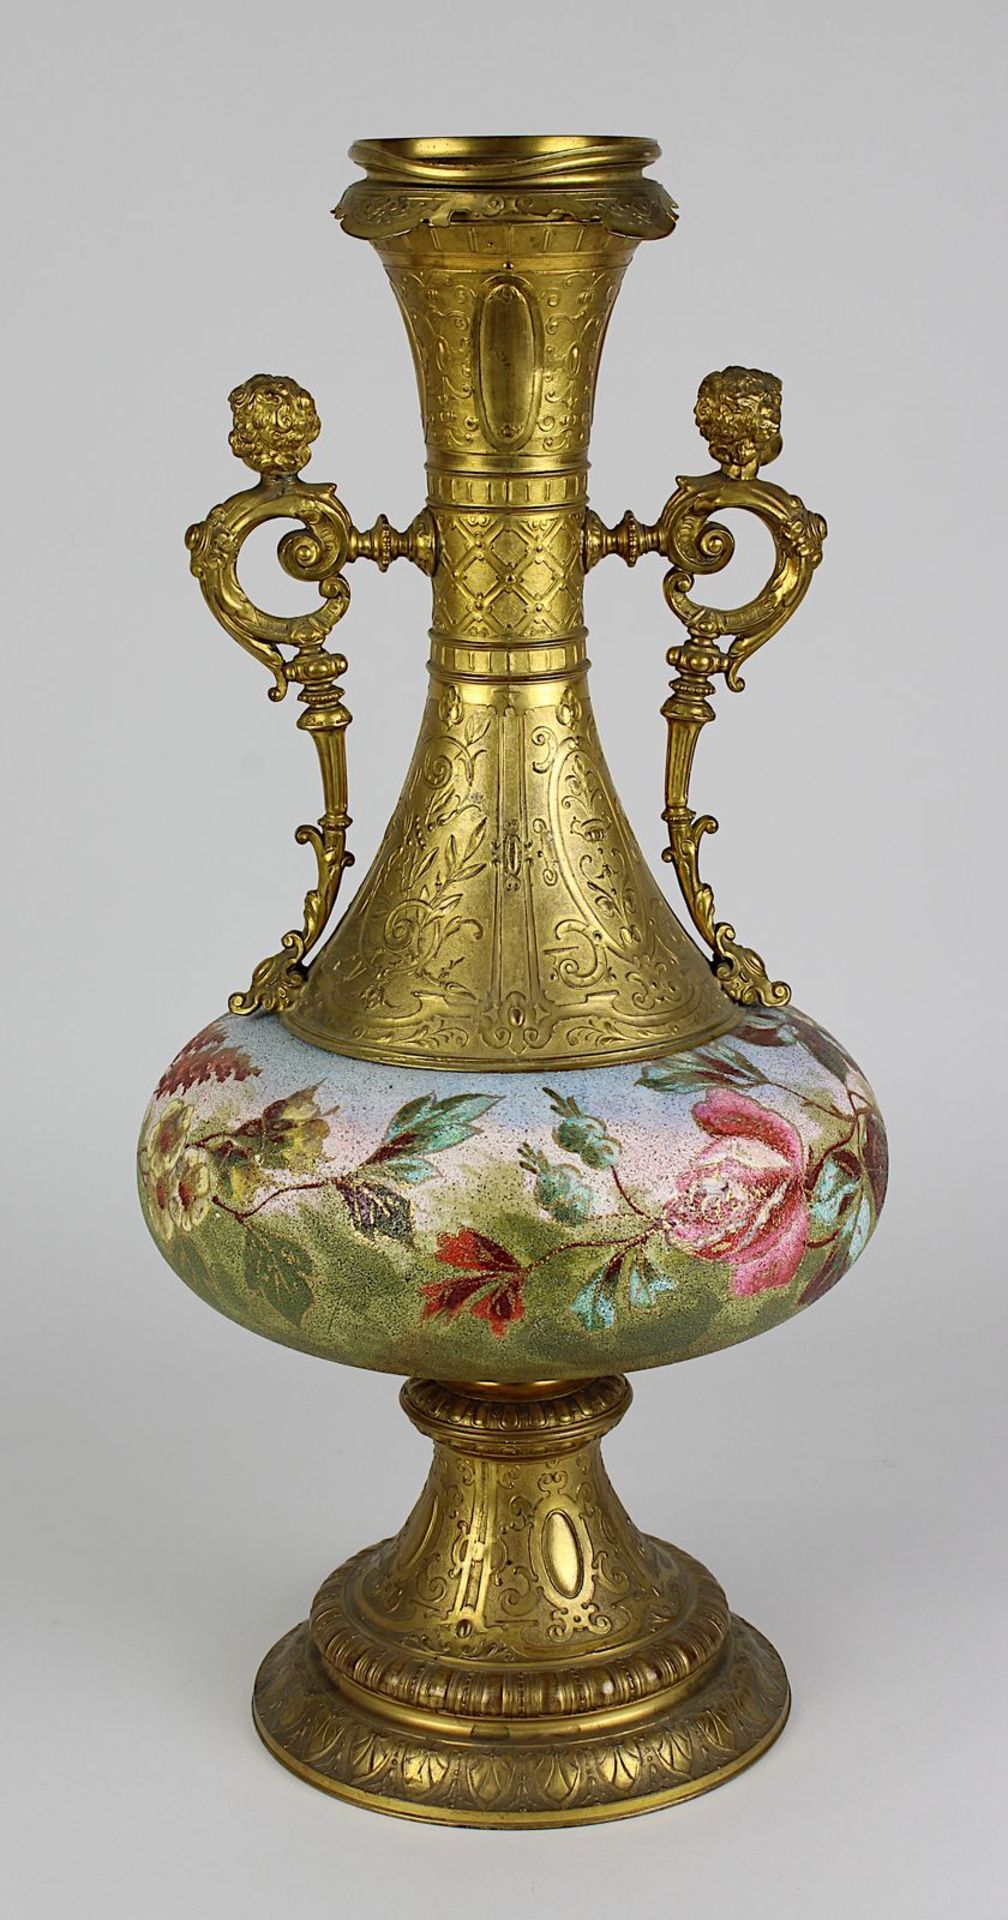 Historismus-Prunkvase aus Keramik mit Metallmontur, deutsch um 1880, Keramikkorpus floral - Image 3 of 3